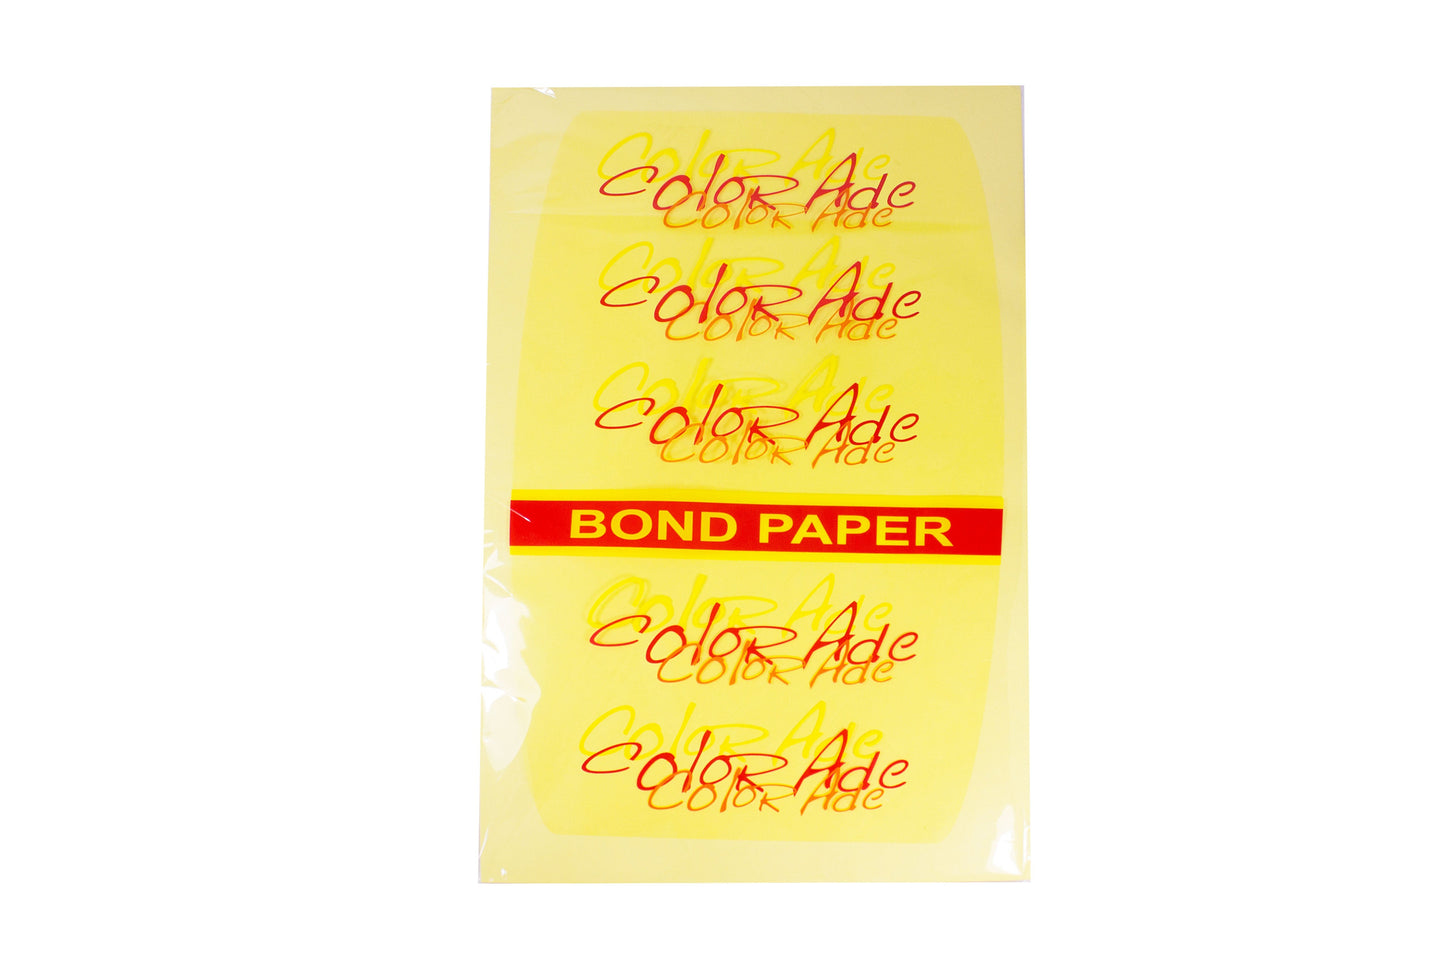 Colorade Bond Paper 56gsm Long